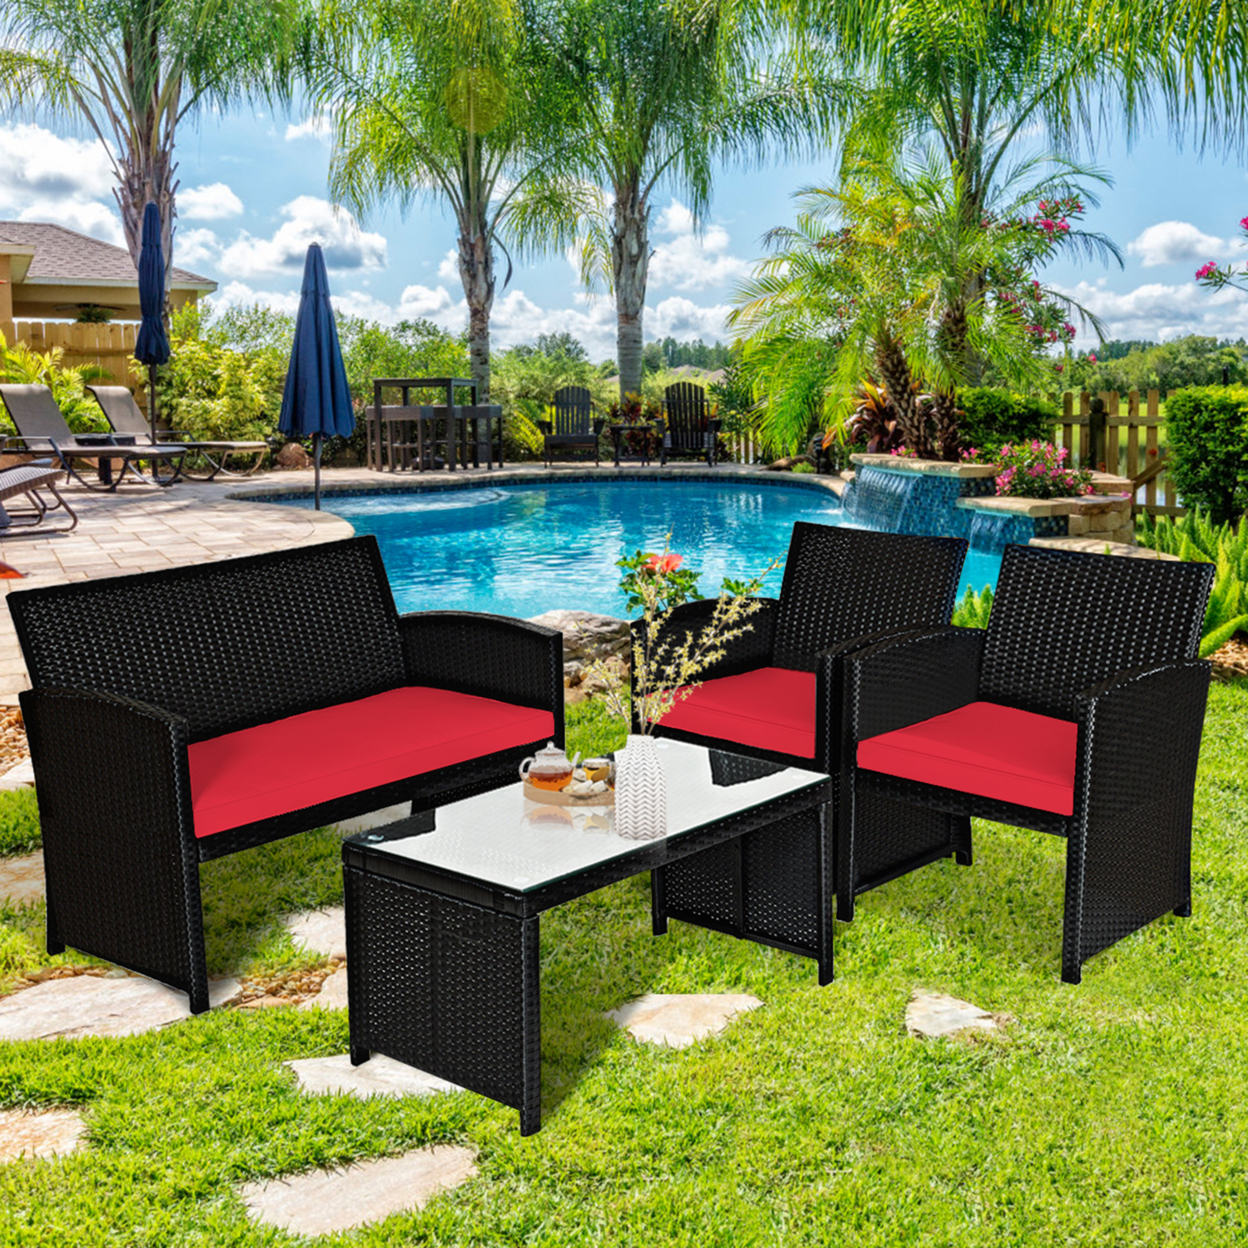 8PCS Rattan Outdoor Conversation Set Patio Furniture Set W/ Red Cushions